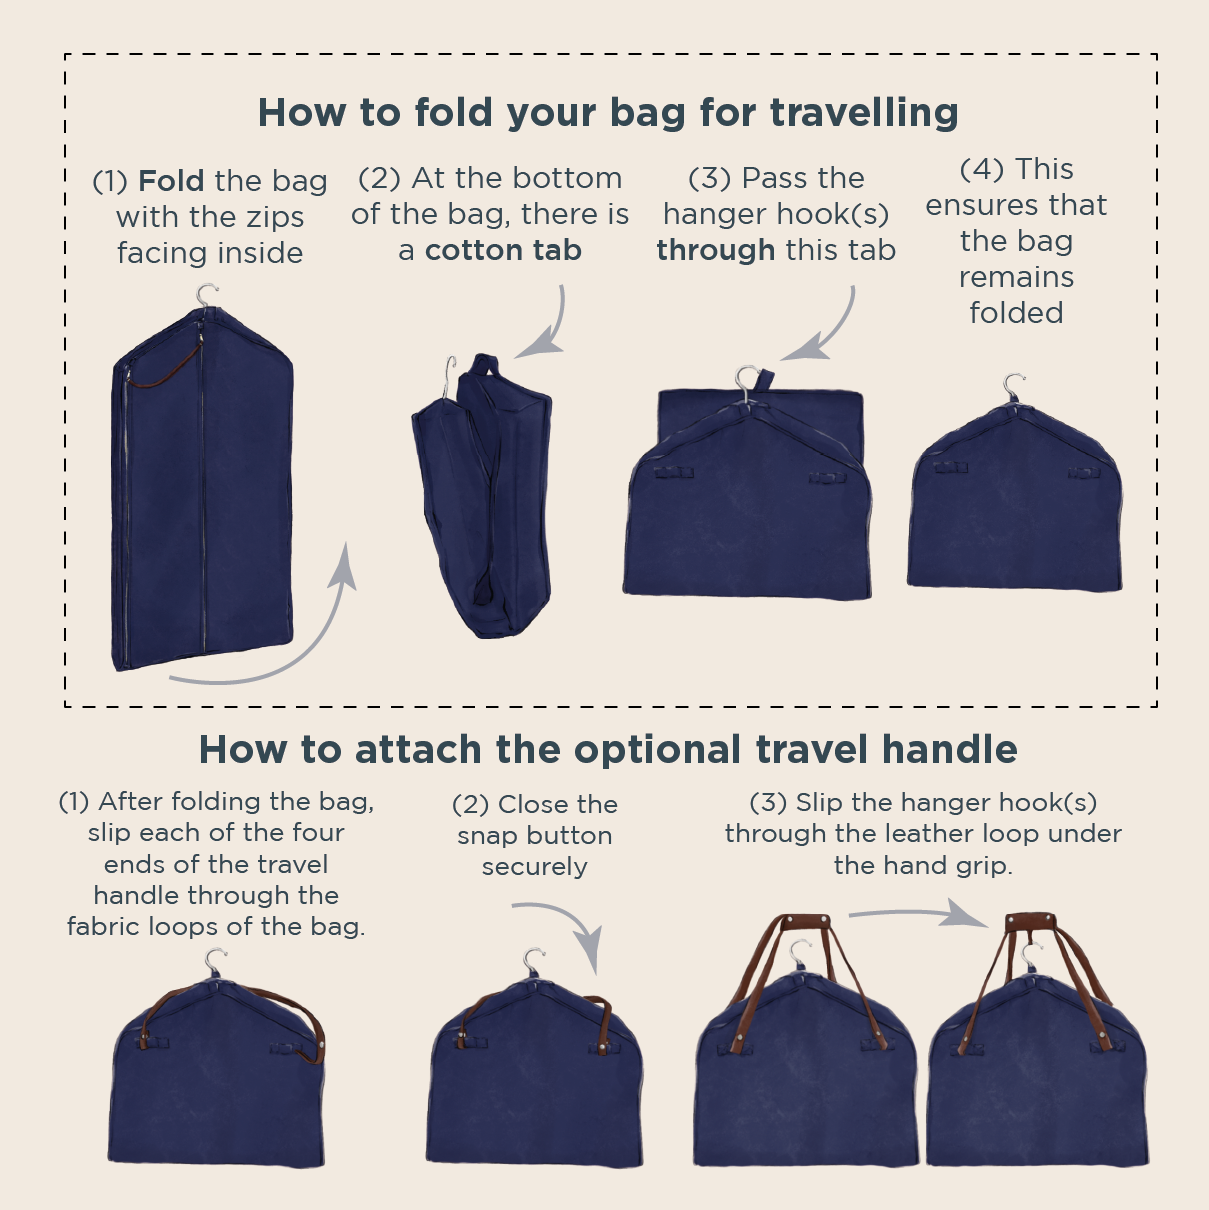 Louis Vuitton Monogram Garment Bag Four Hangers